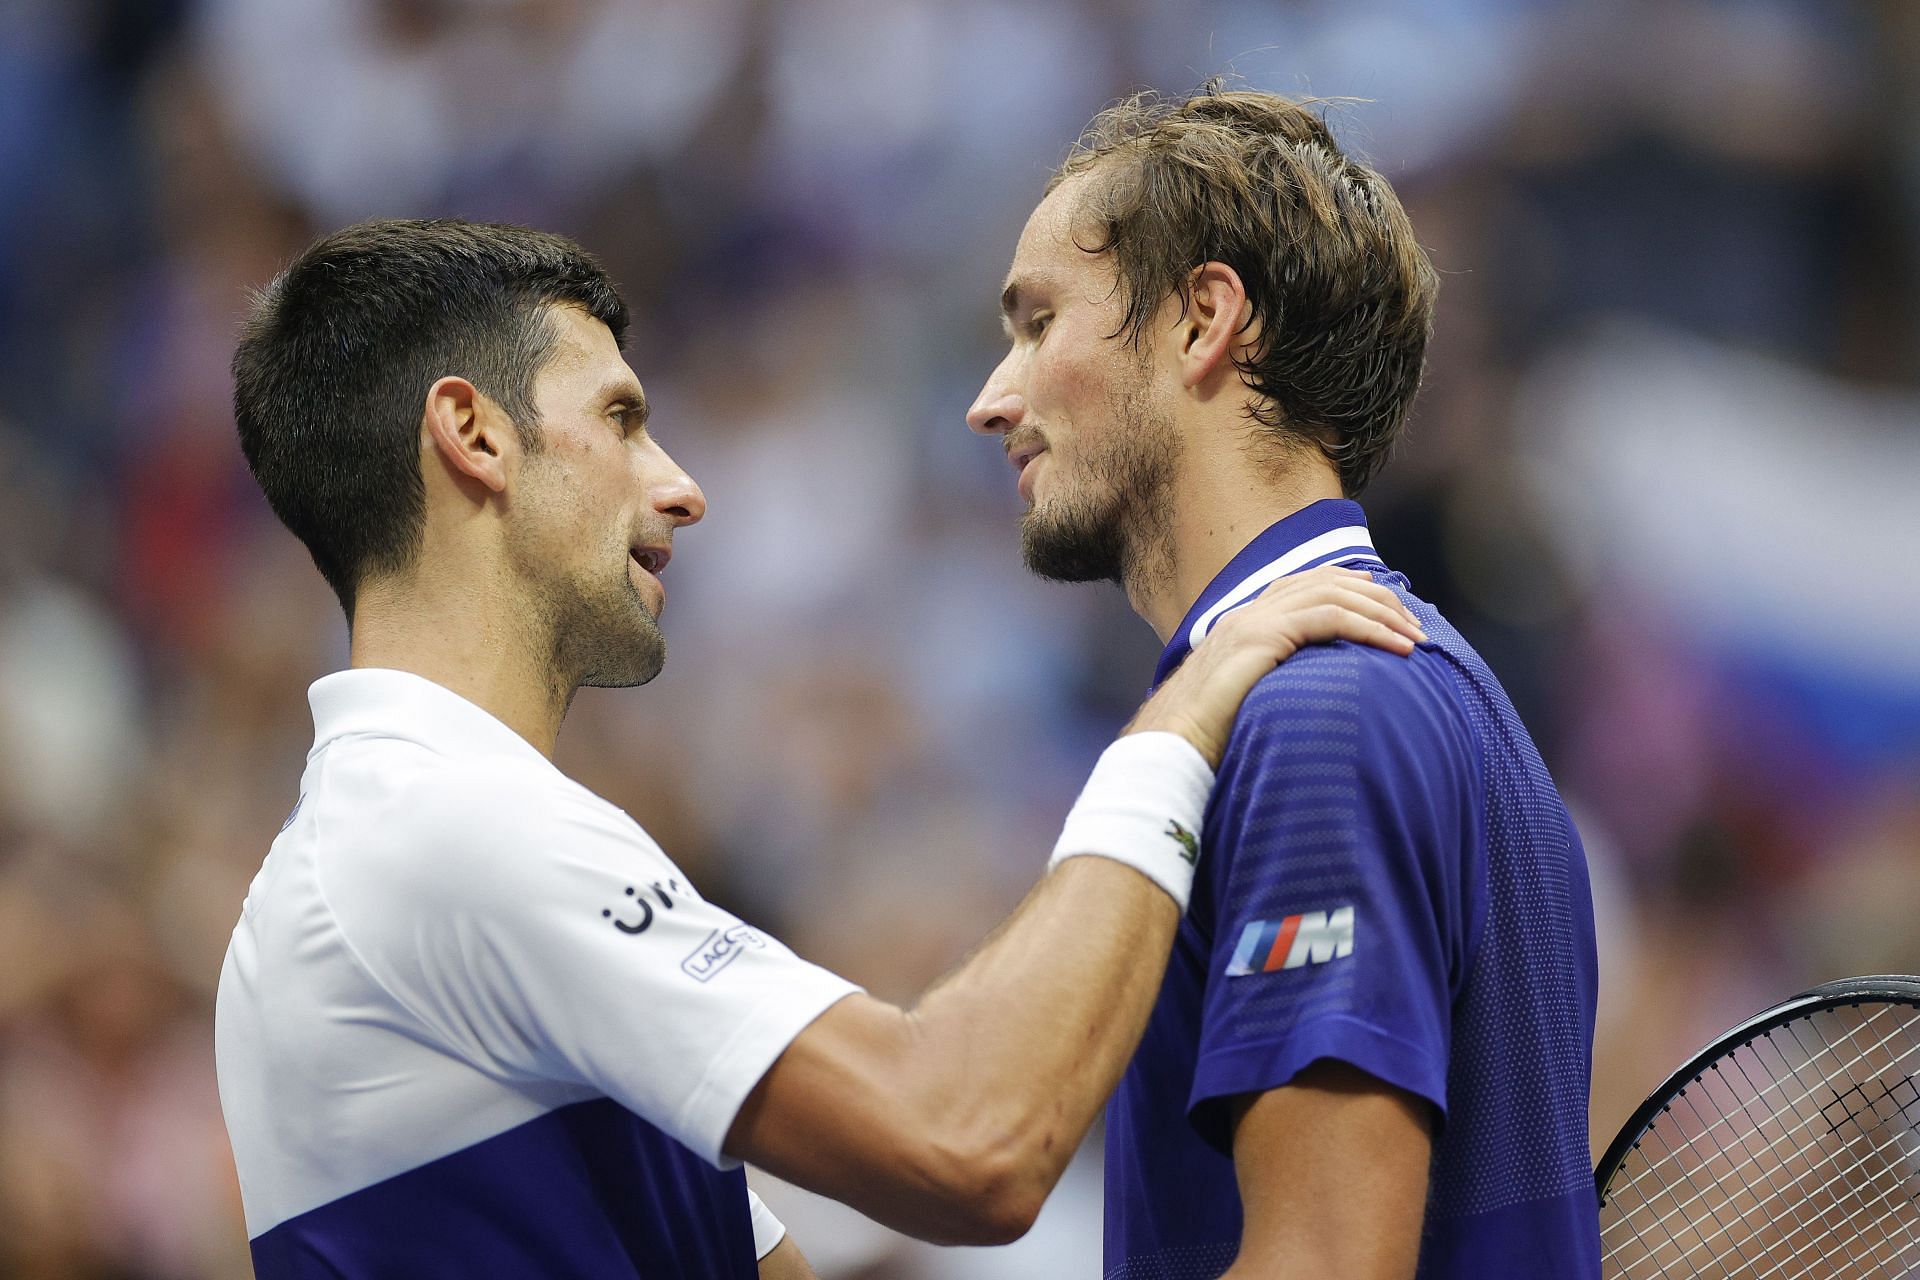 Novak Djokovic after beating Daniil Medvedev in the 2021 US Open final